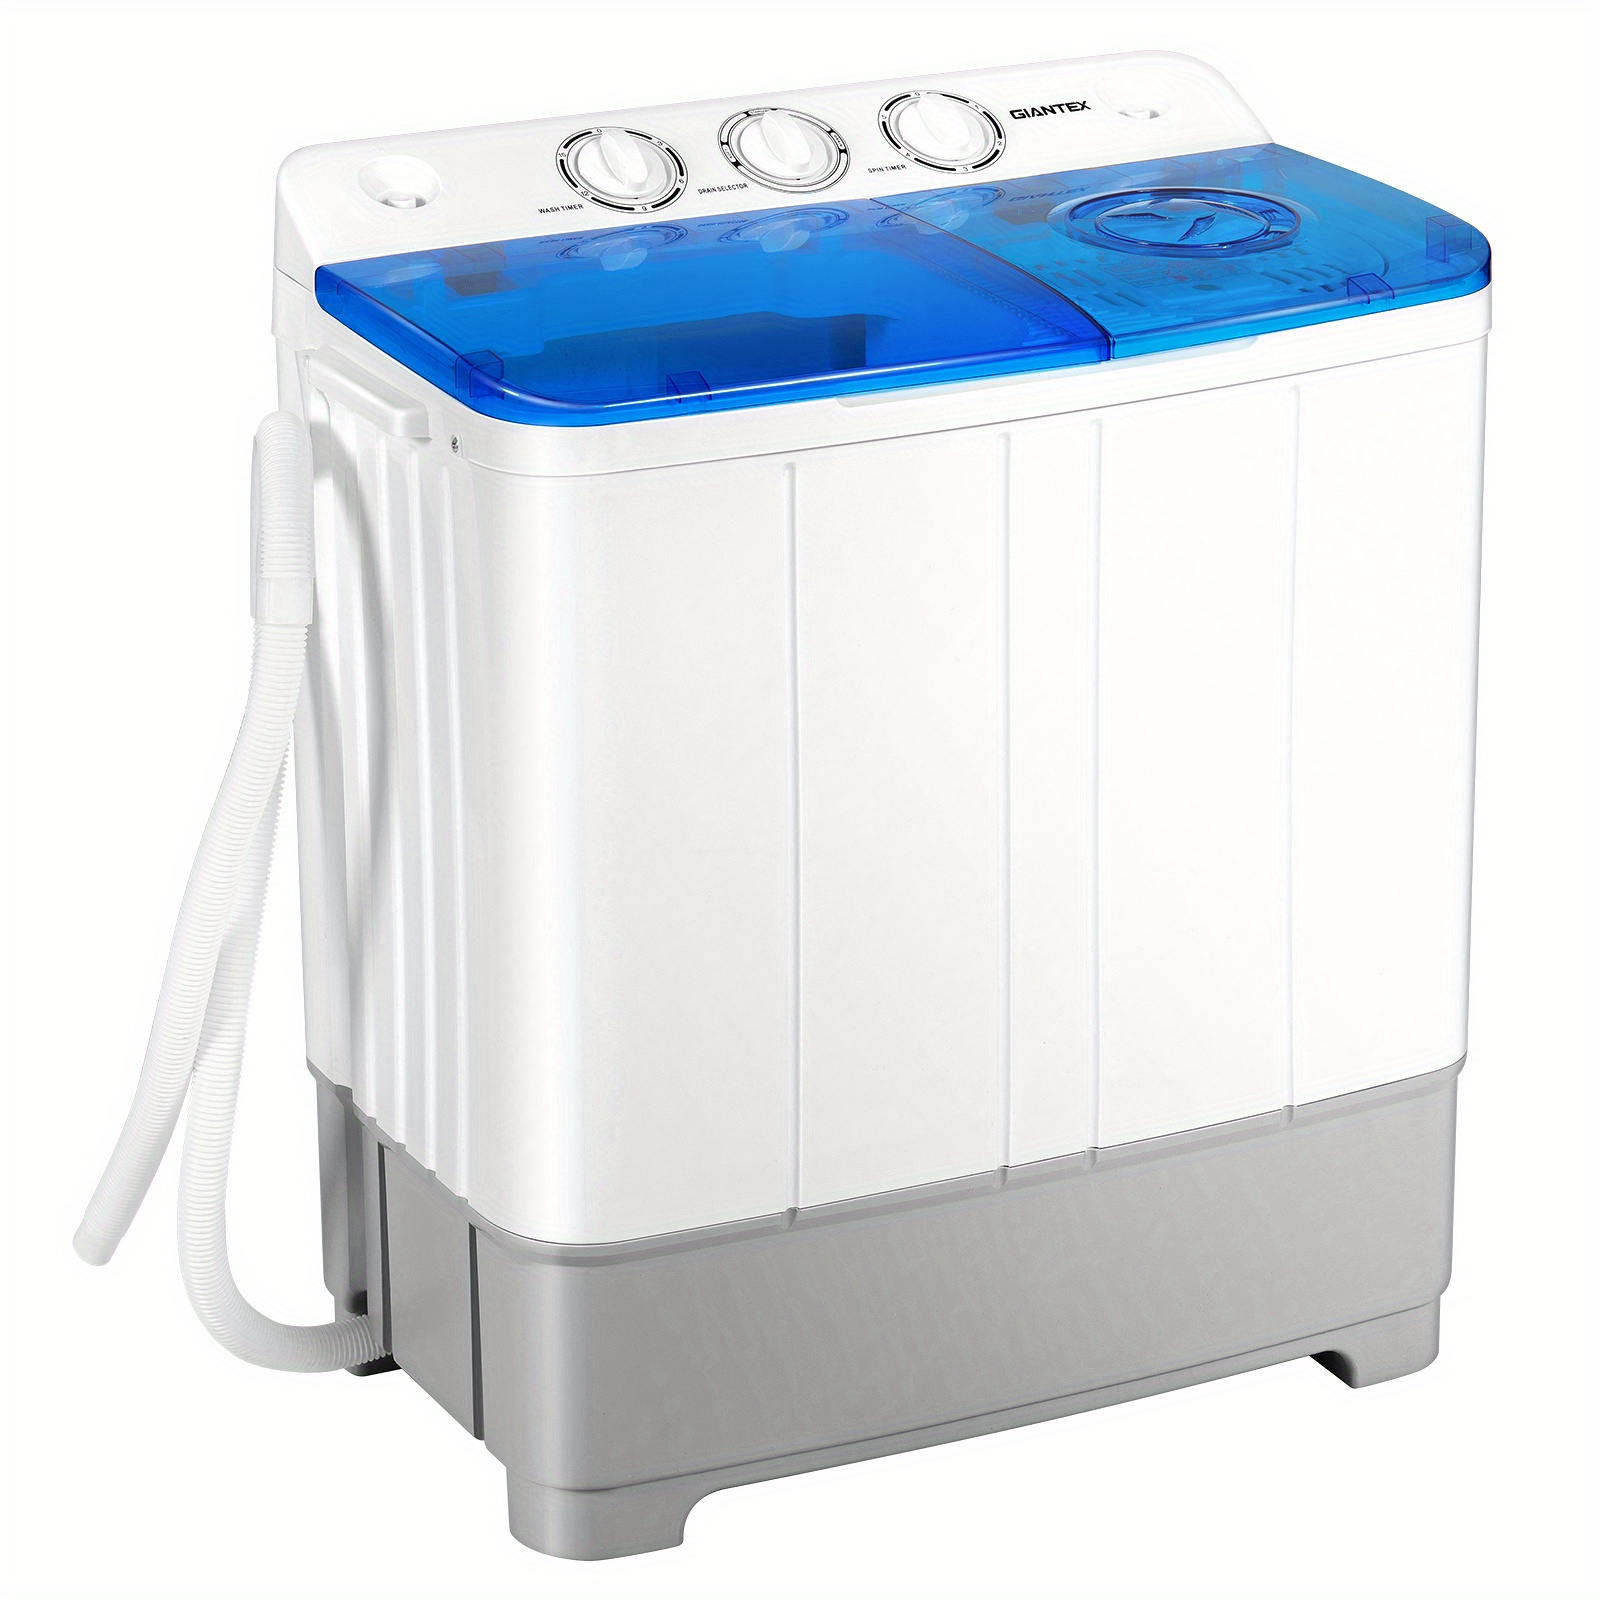 

Costway Portable Twin Tub Mini Washing Machine Washer 13.2lb&spinner 8.8lb Blue